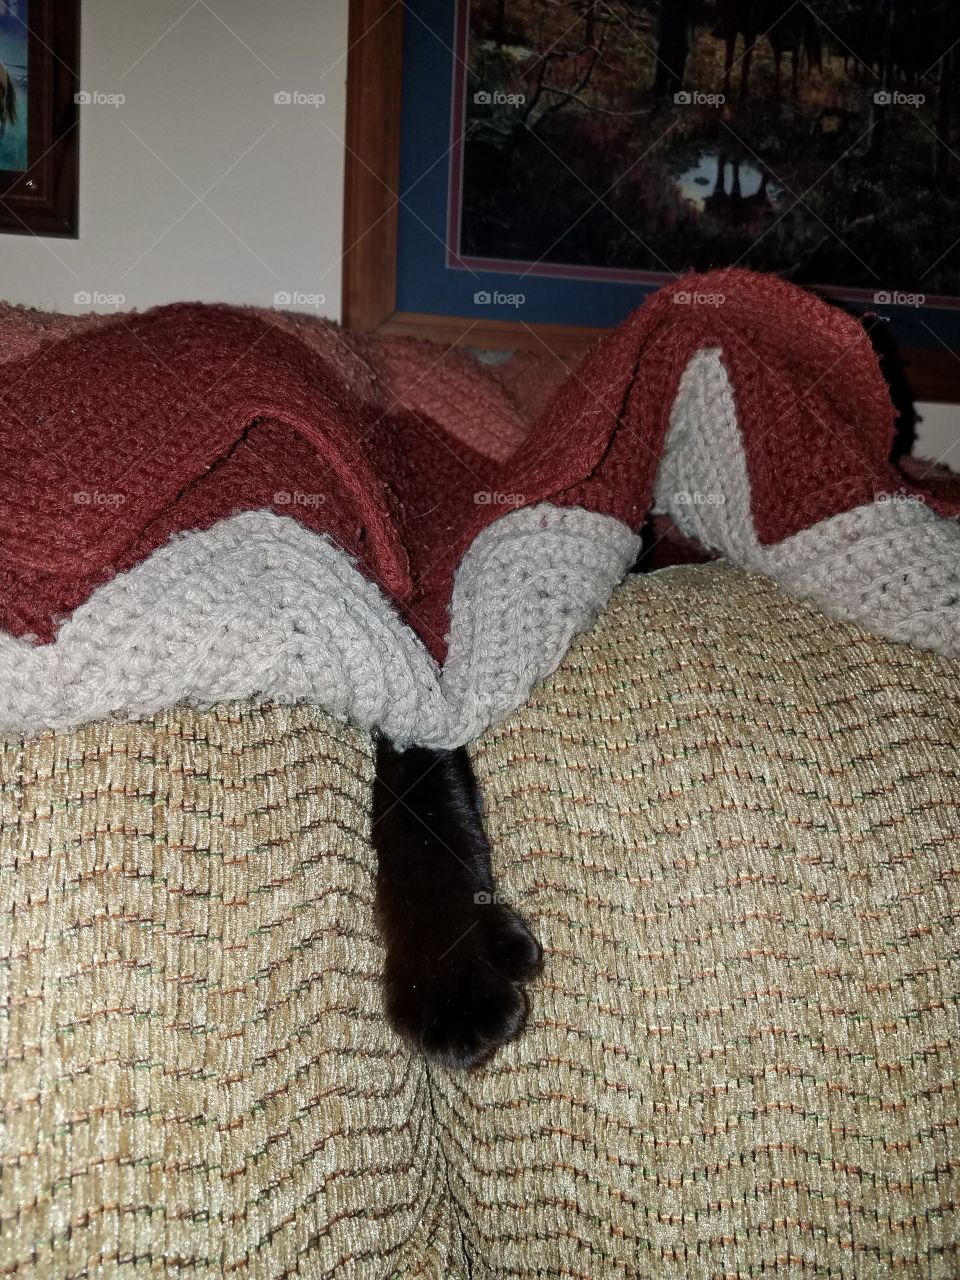 she thinks she's hiding